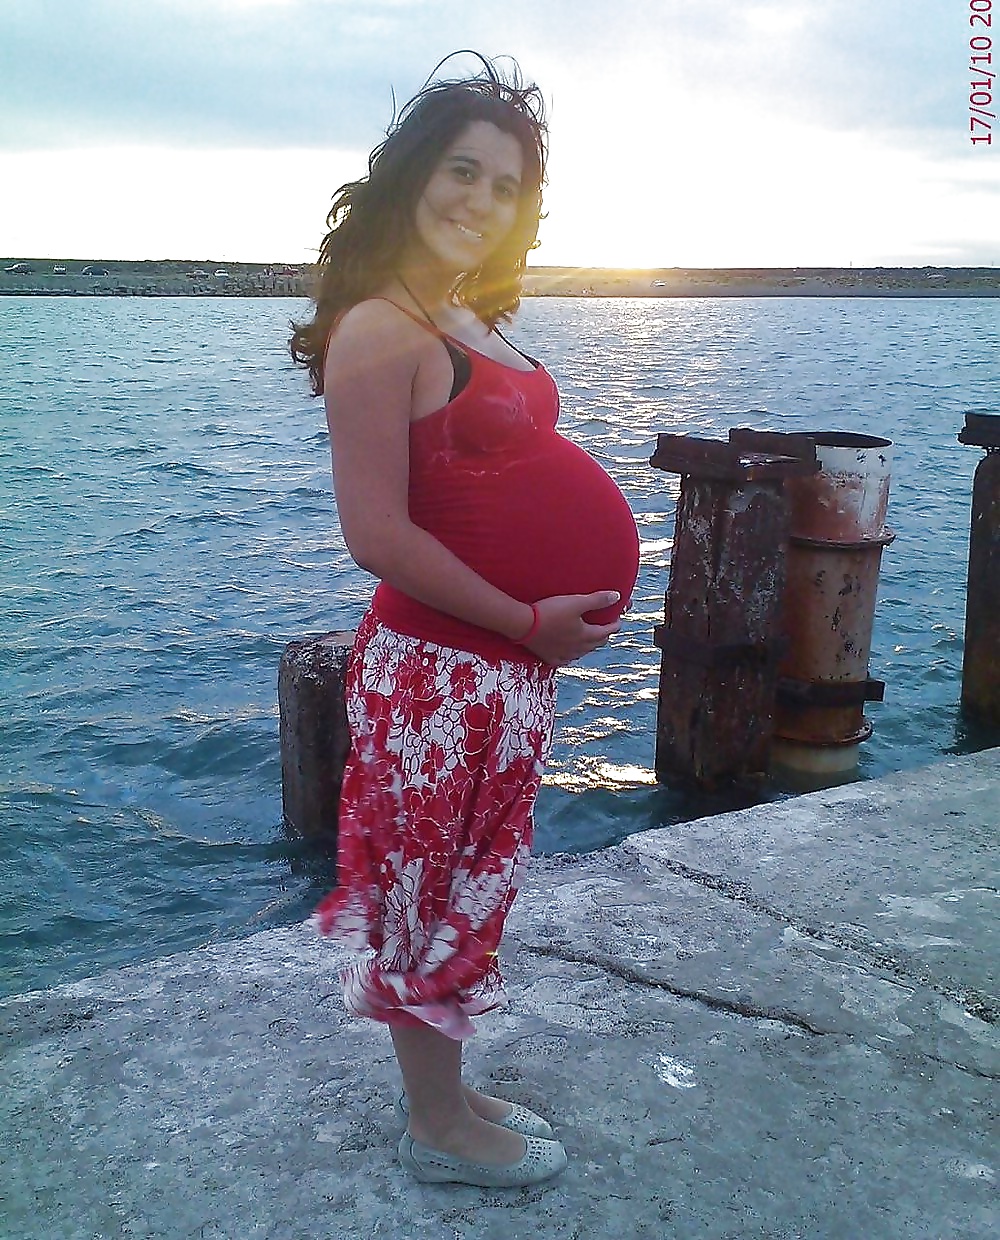 Pregnant Women are Beautiful! #27130437